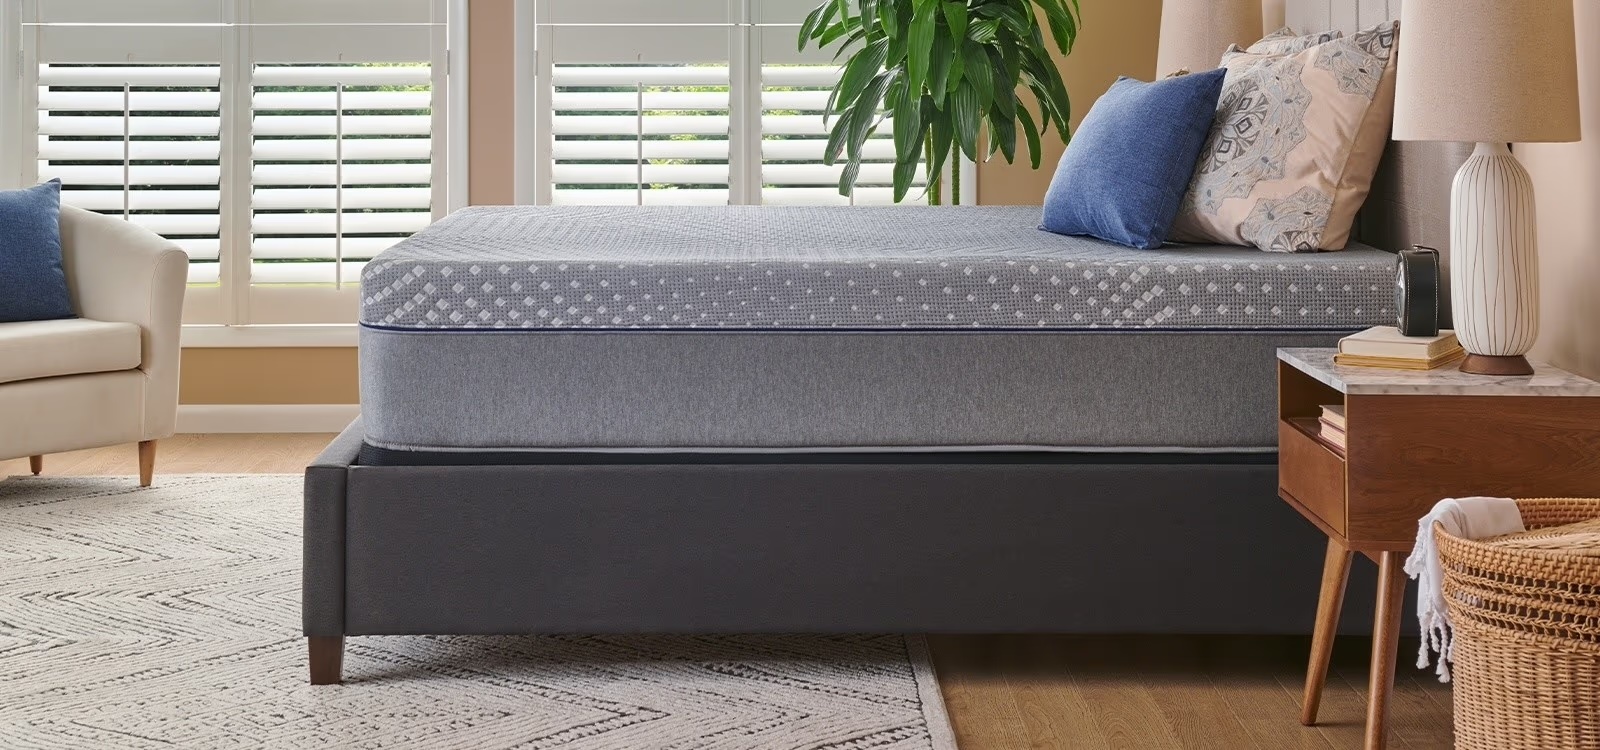 Sealy Posturepedic Hybrid mattress side view